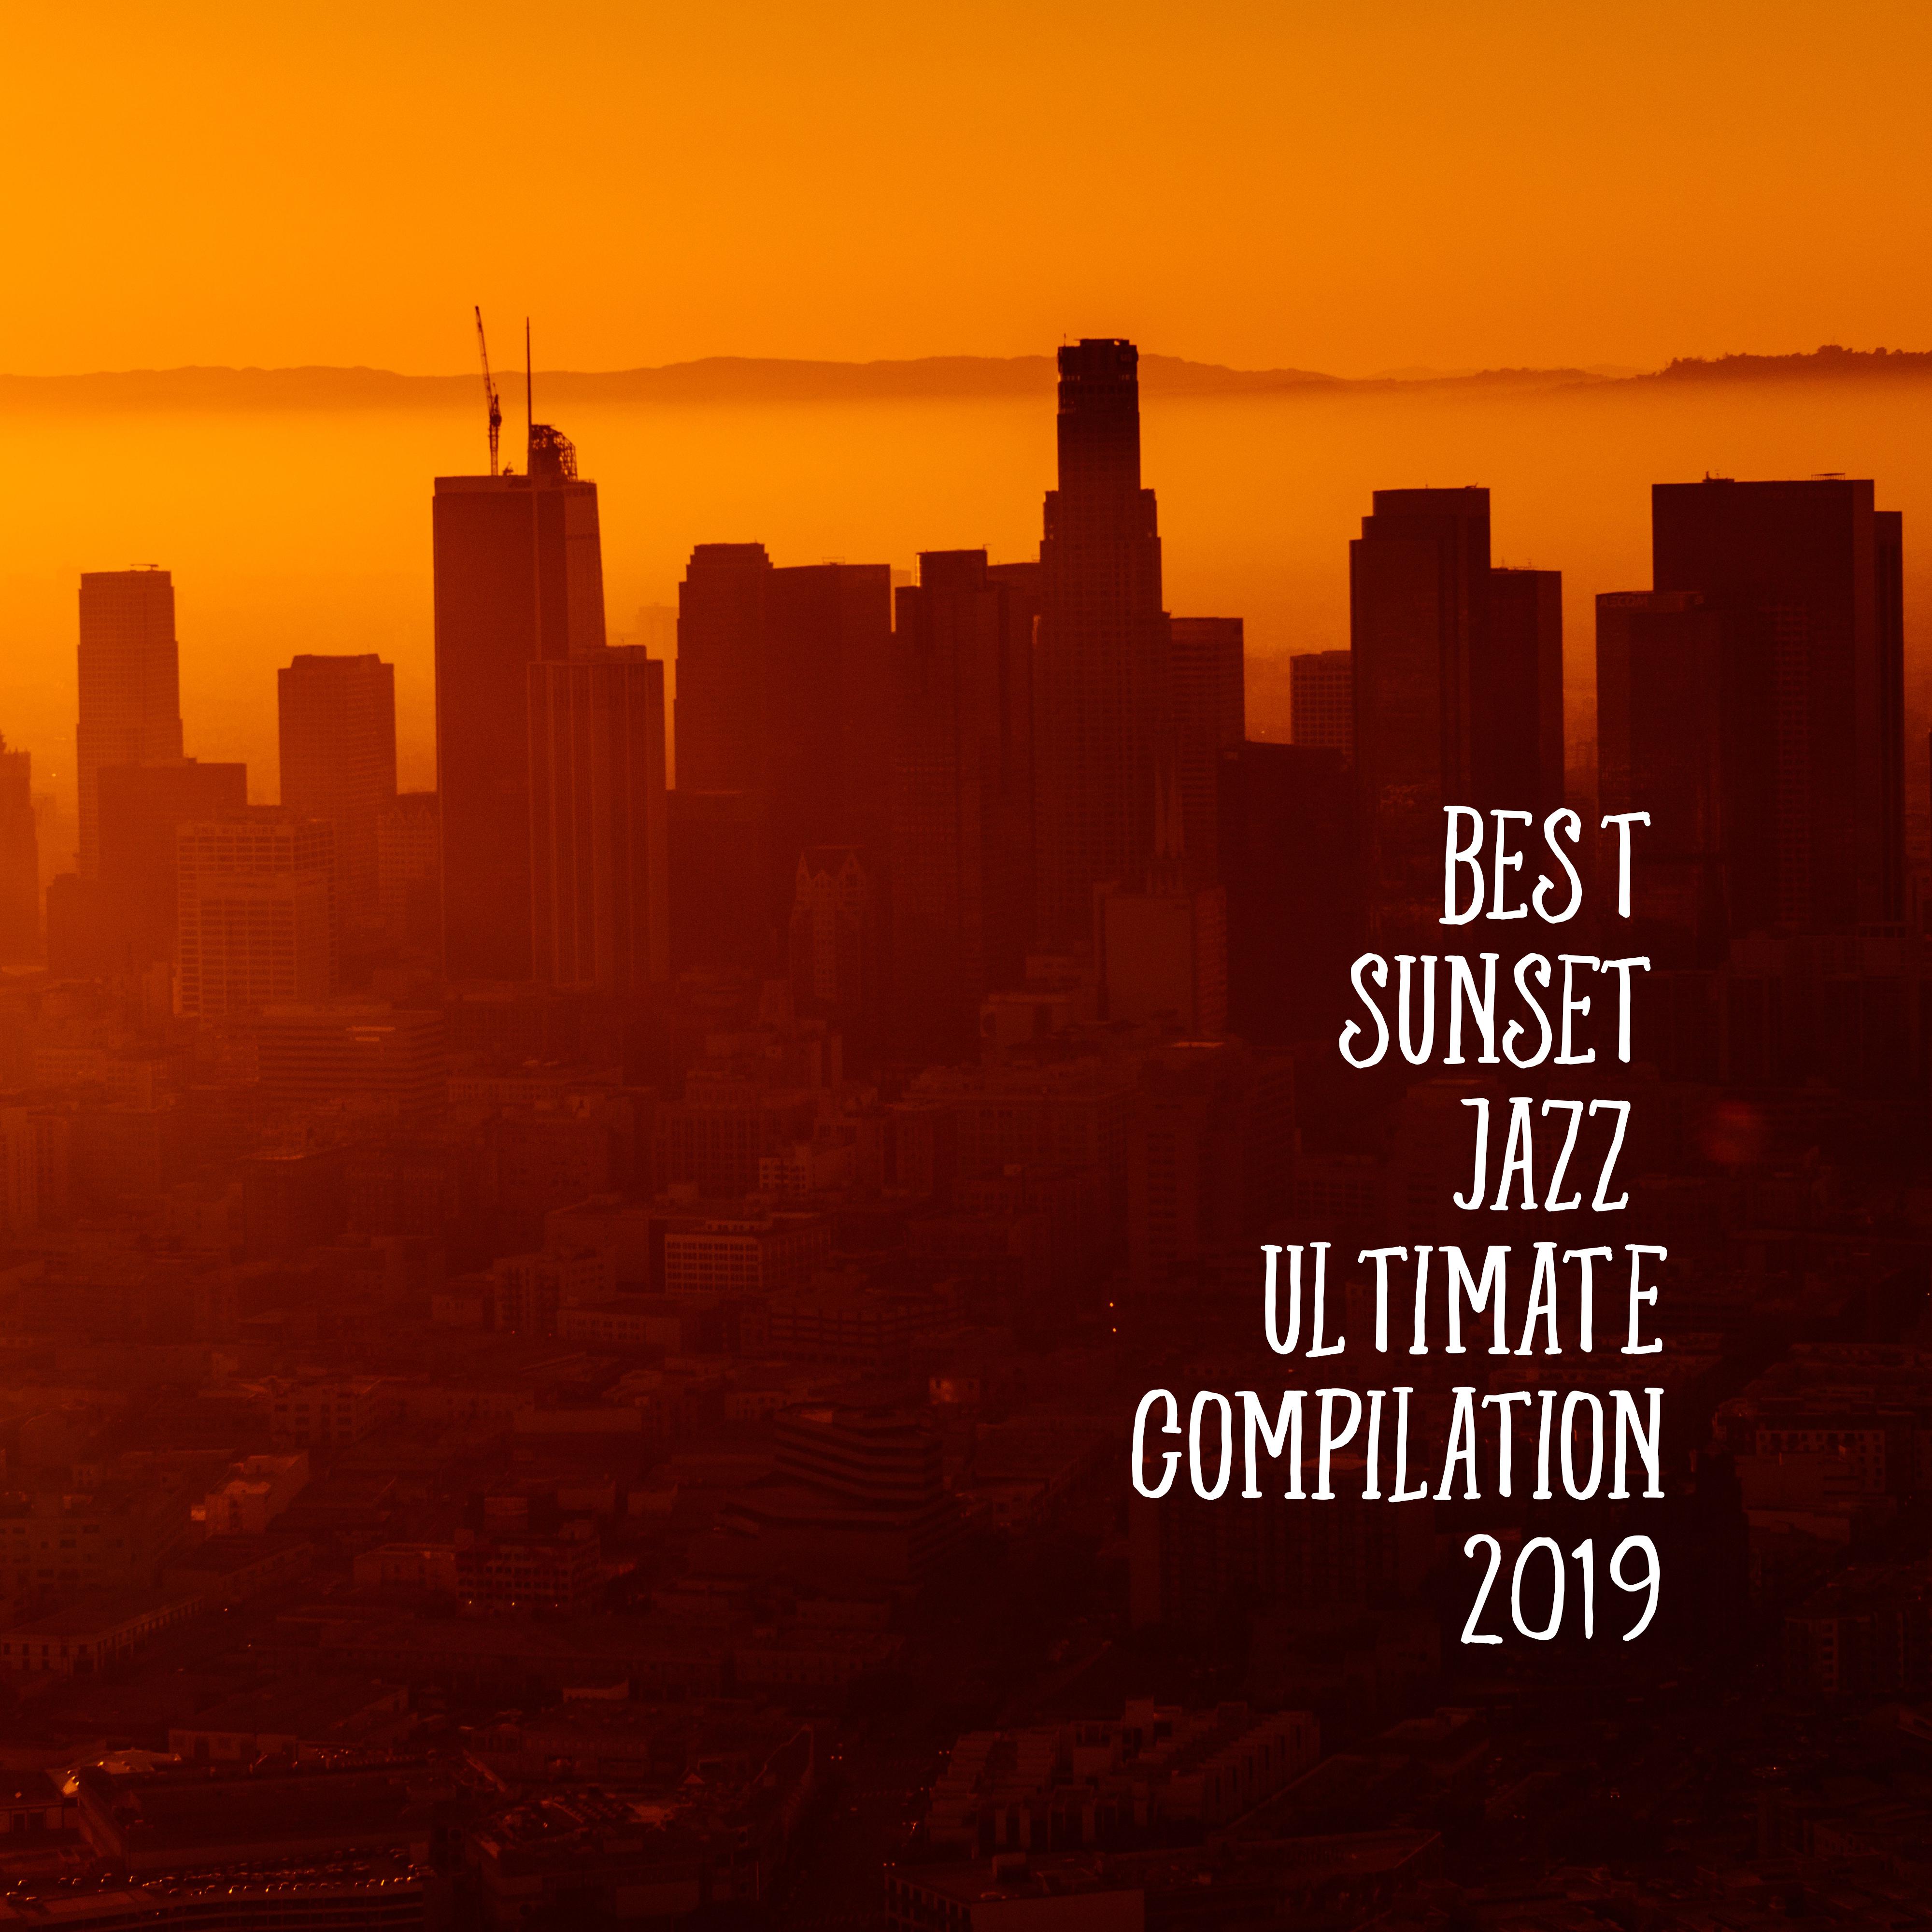 Best Sunset Jazz Ultimate Compilation 2019